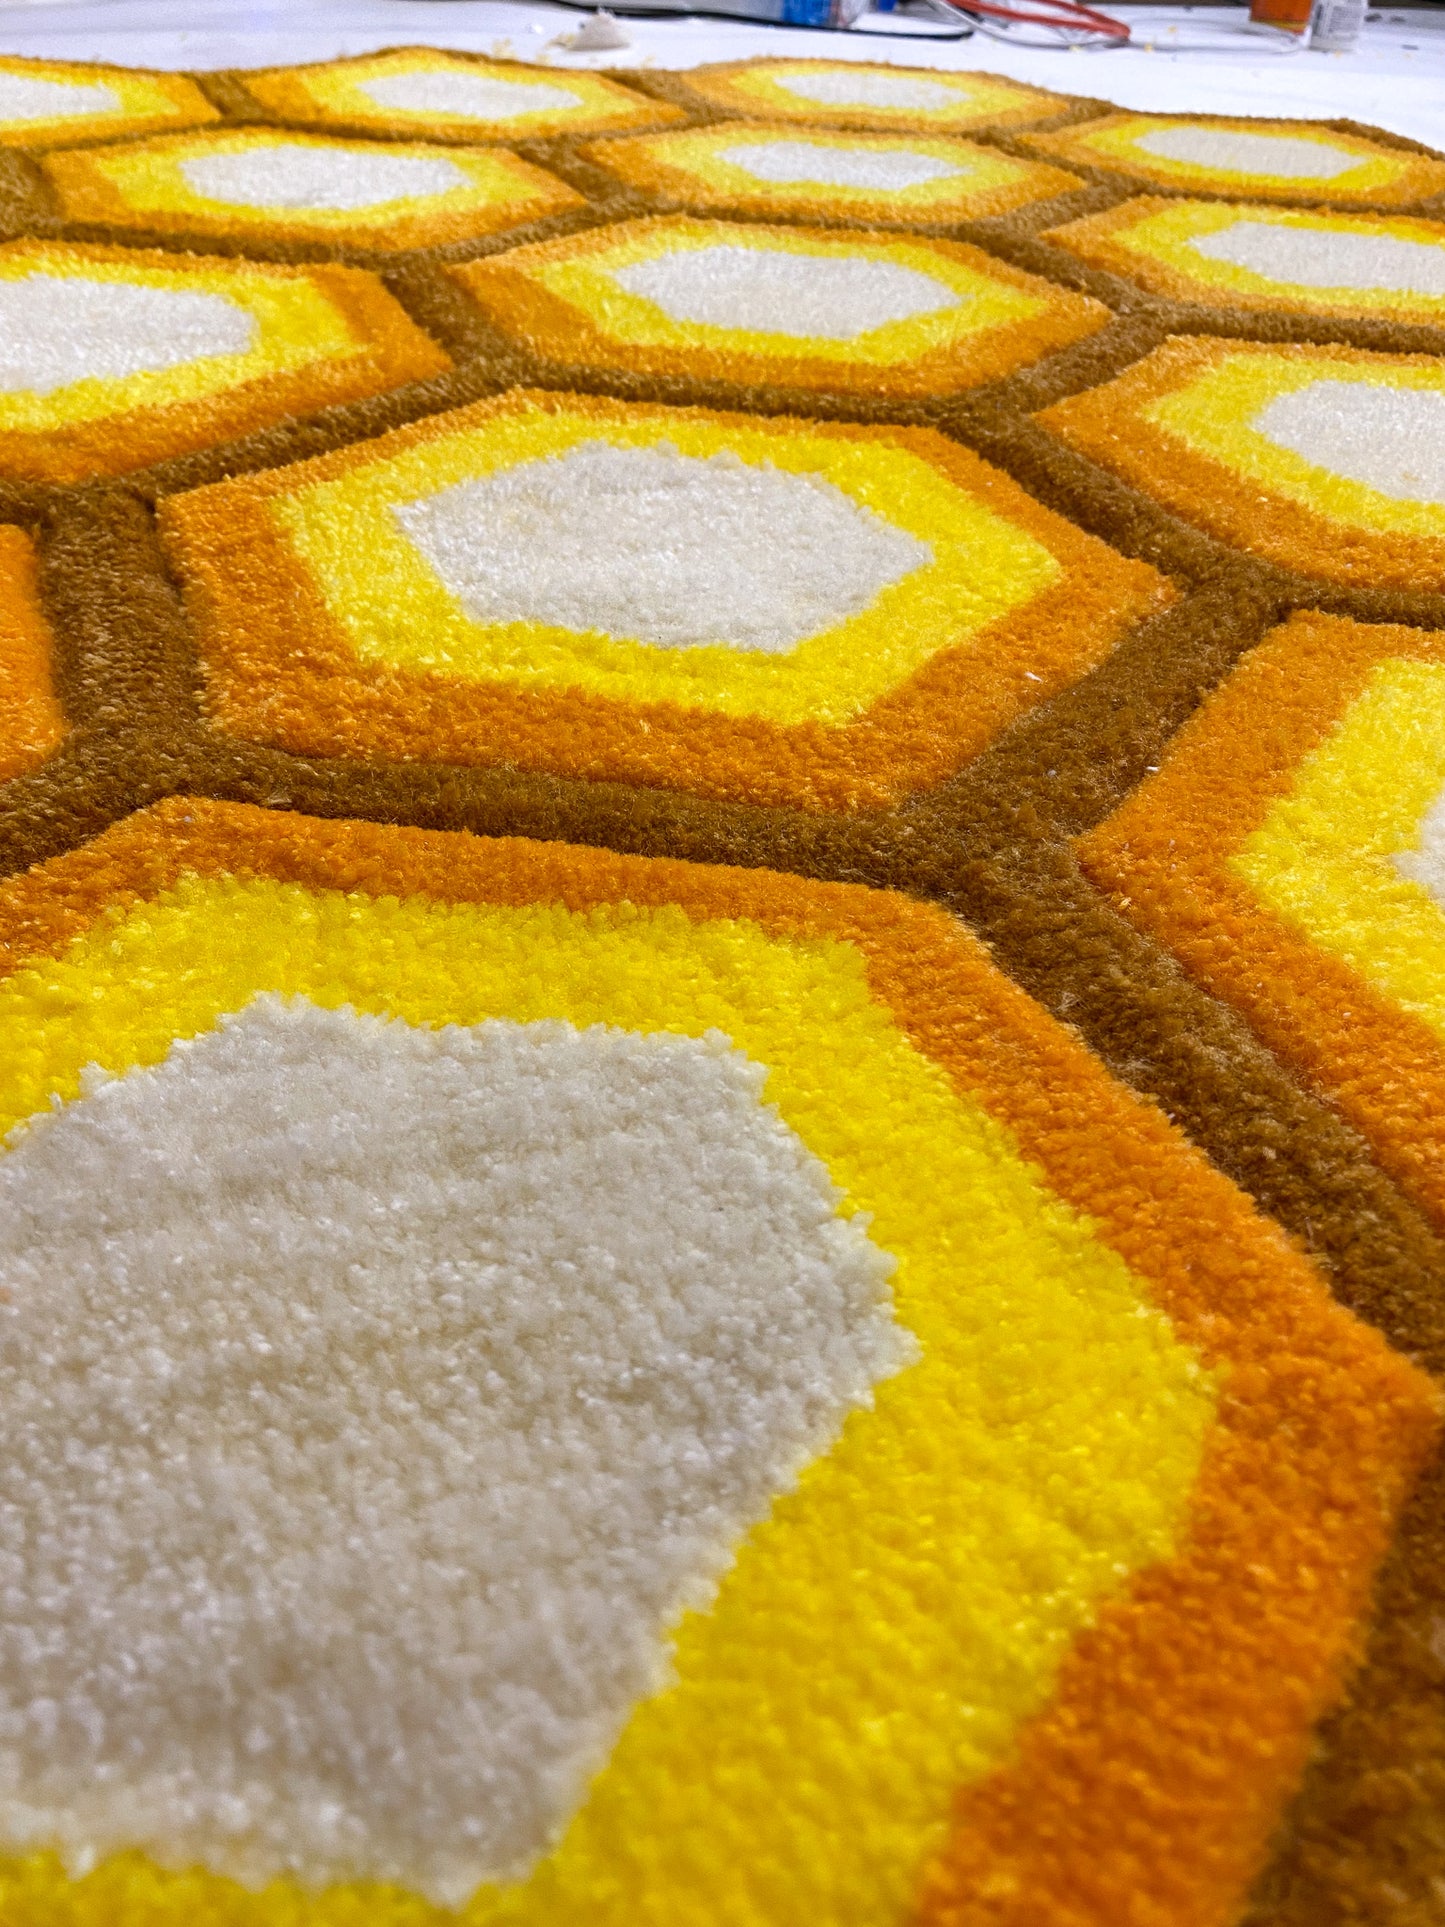 Giant honey comb rug